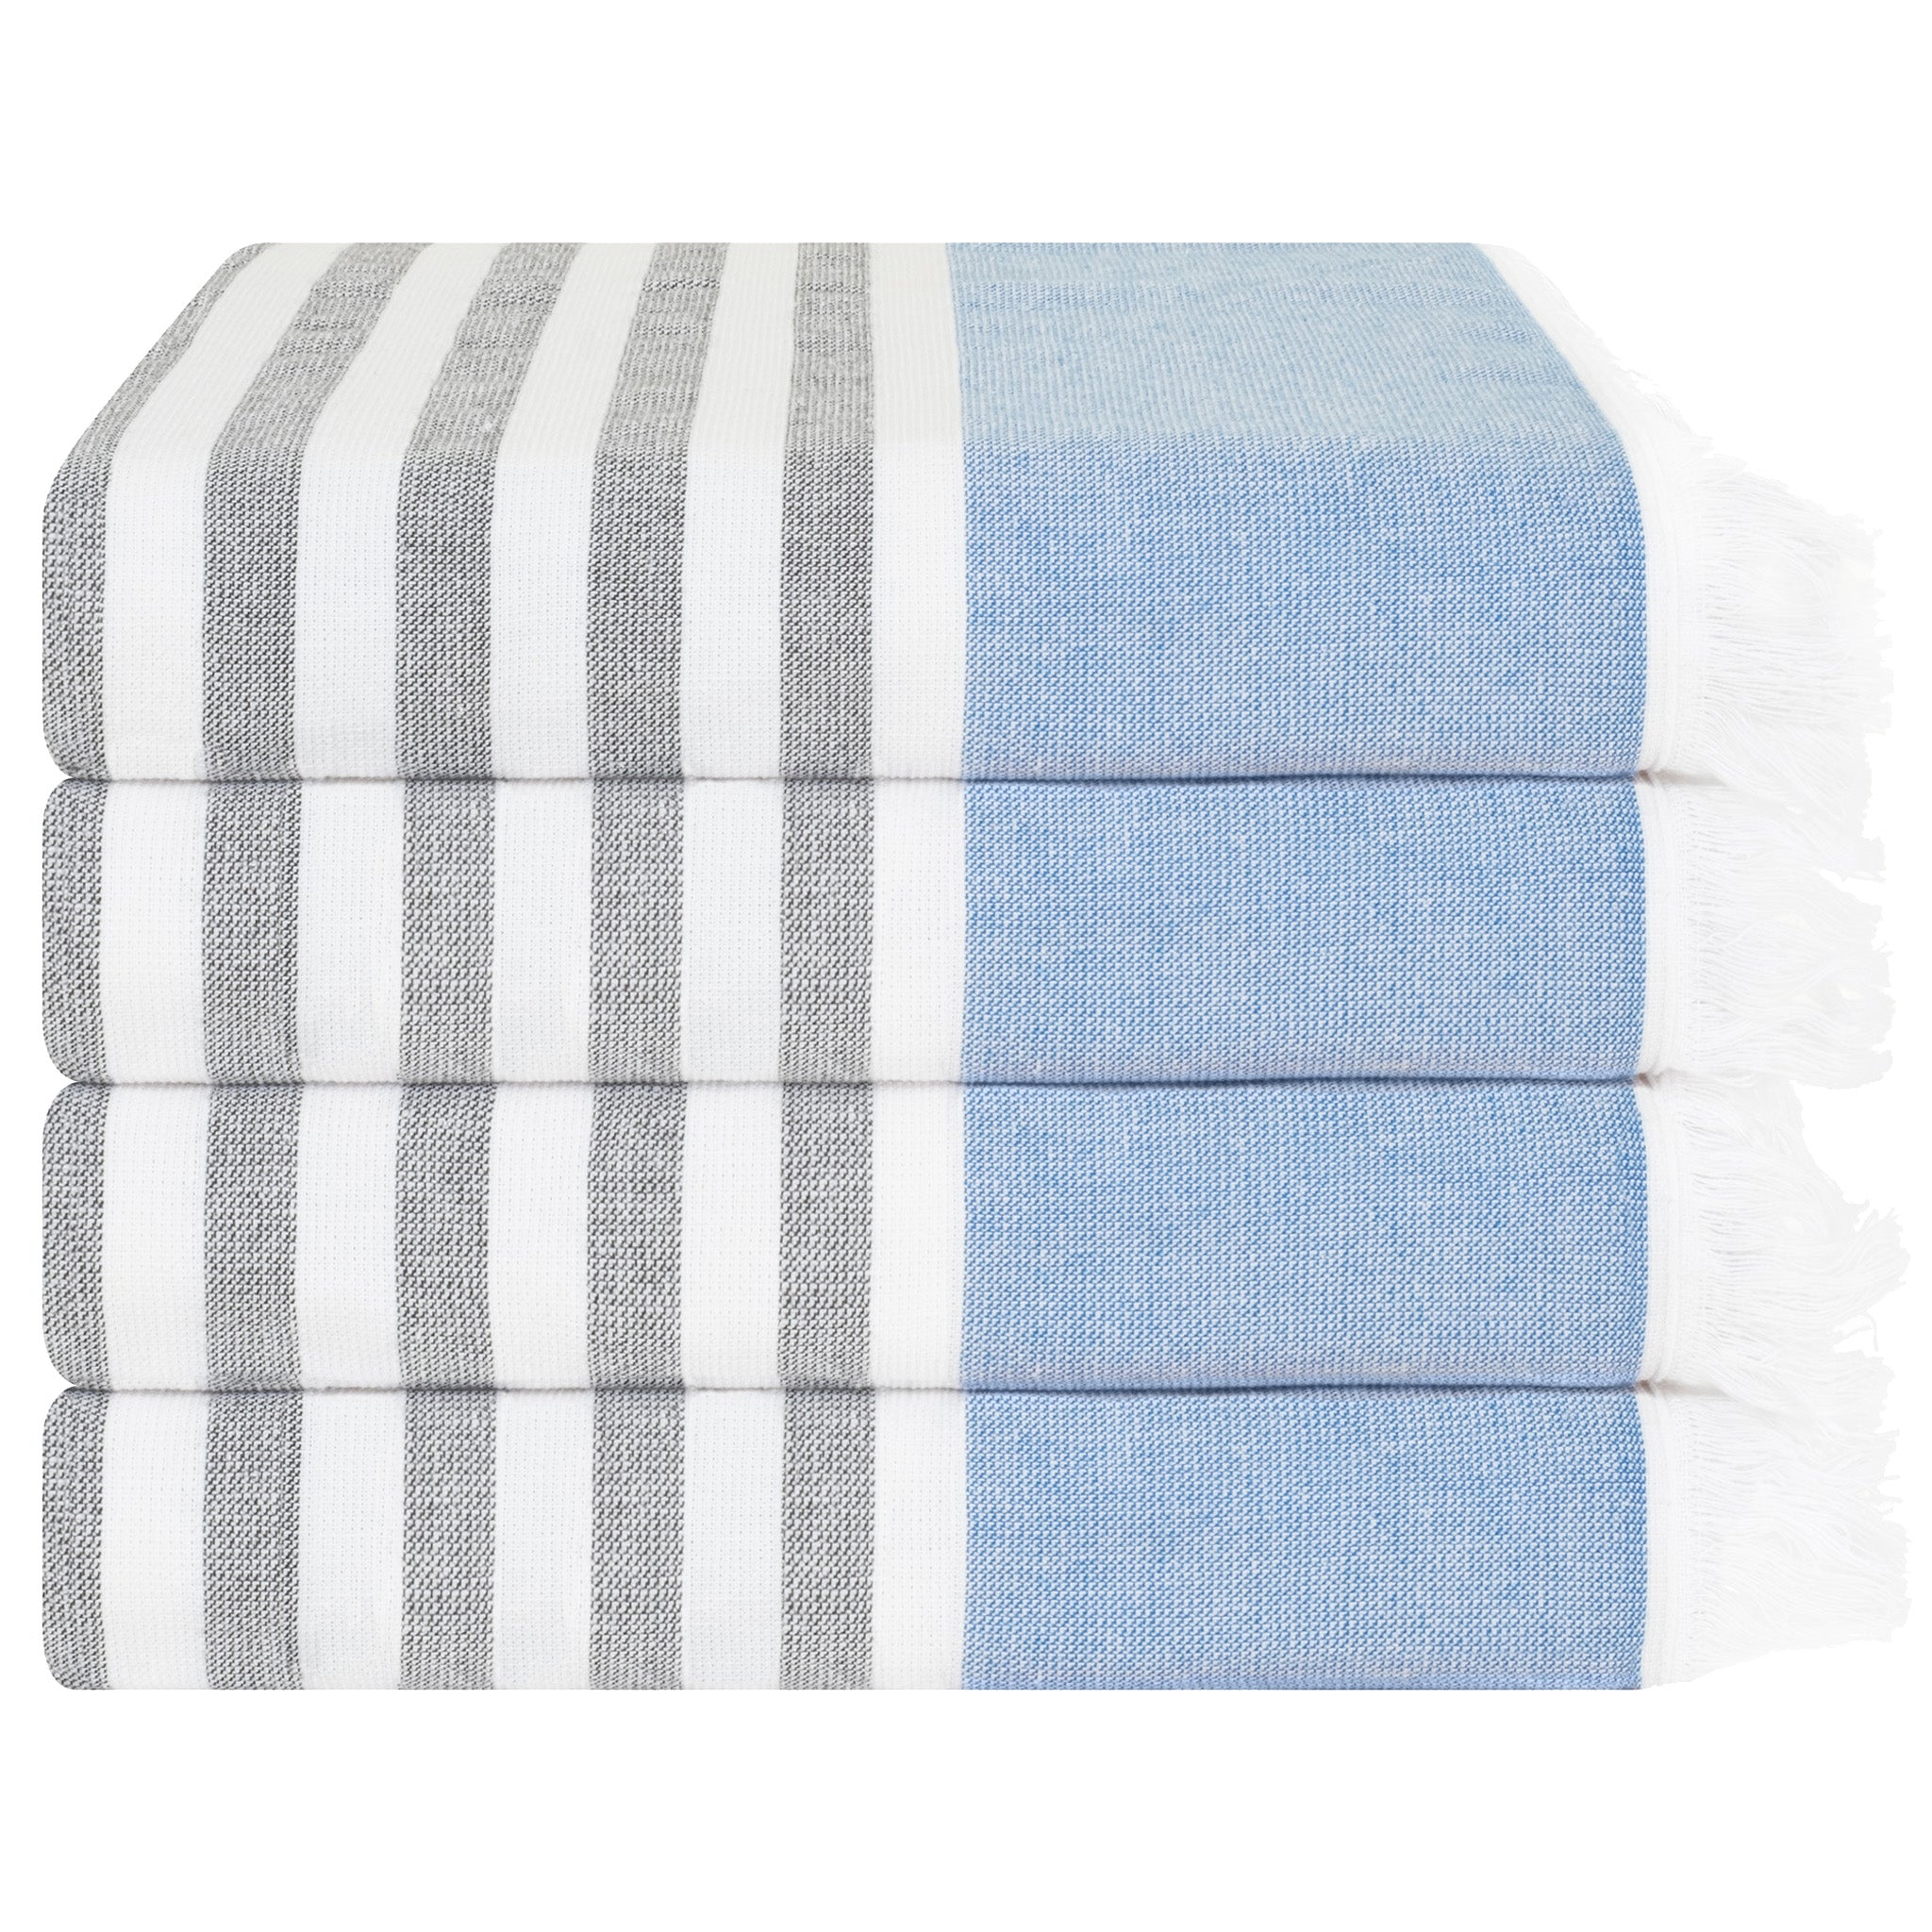 4 Packed 100% Cotton Terry Peshtemal & Beach Towel Navy Blue-01